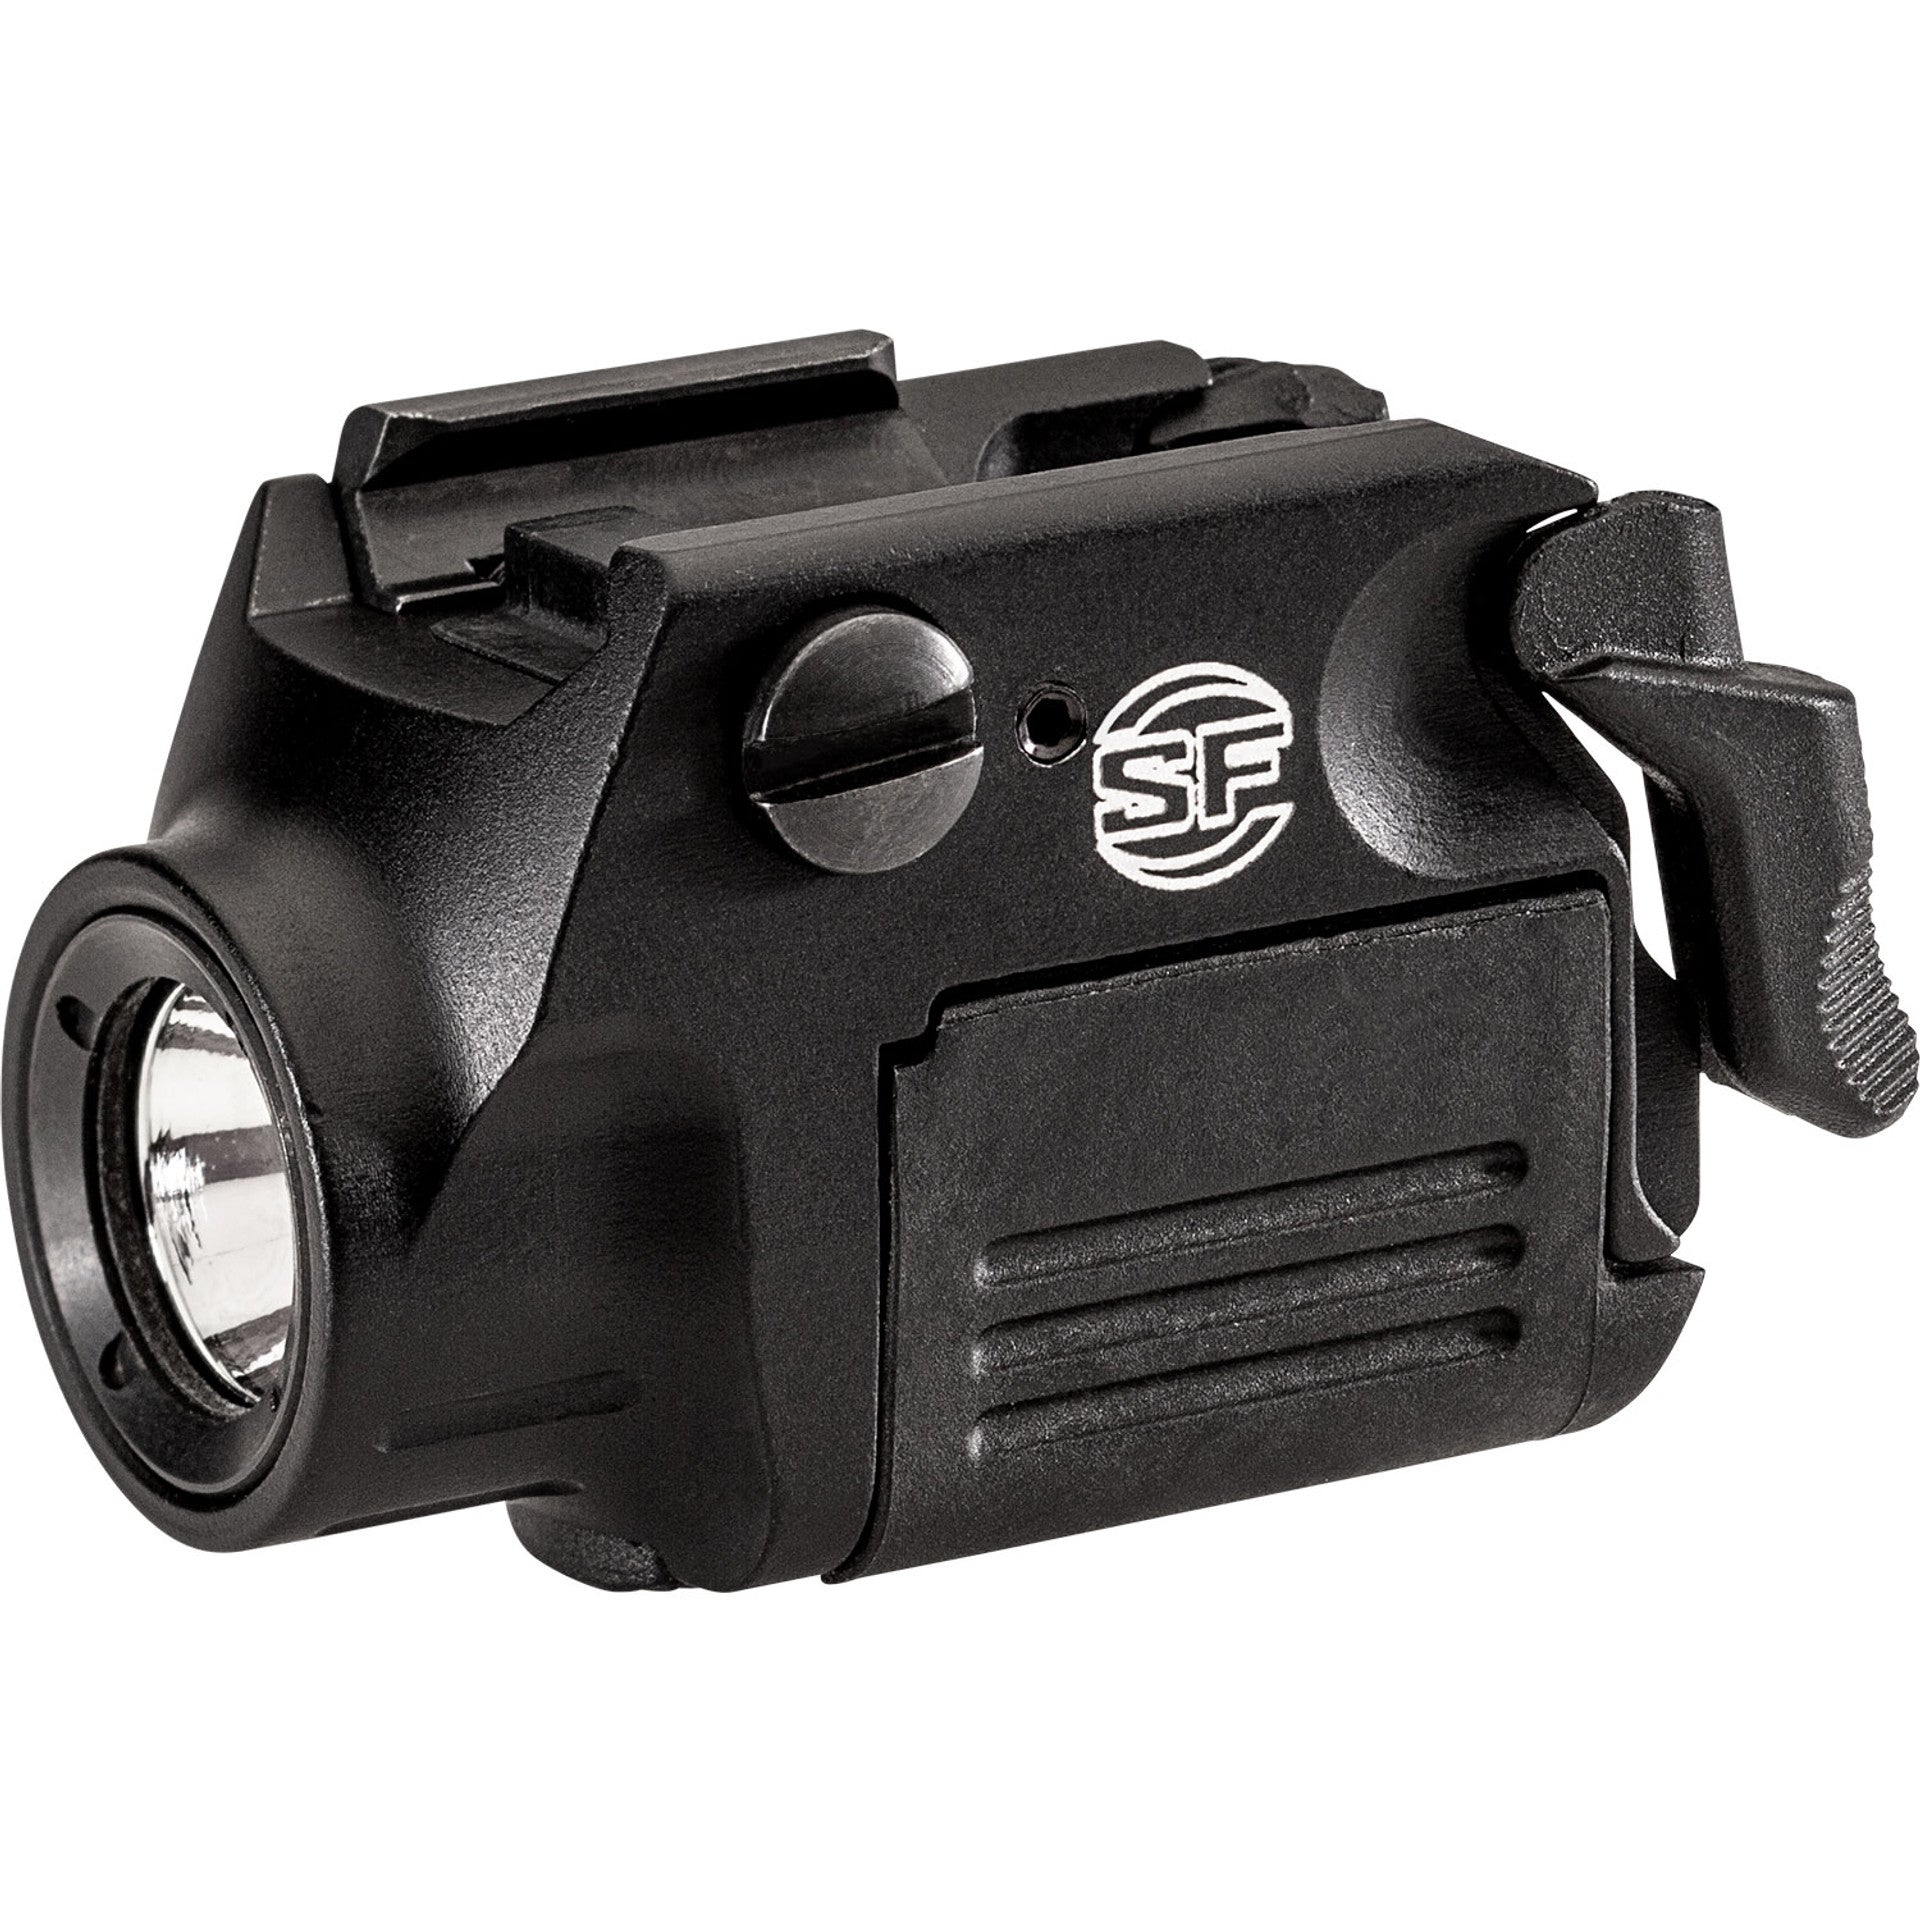 SureFire XSC WEAPONLIGHT Micro-Compact LED Handgun WeaponLight